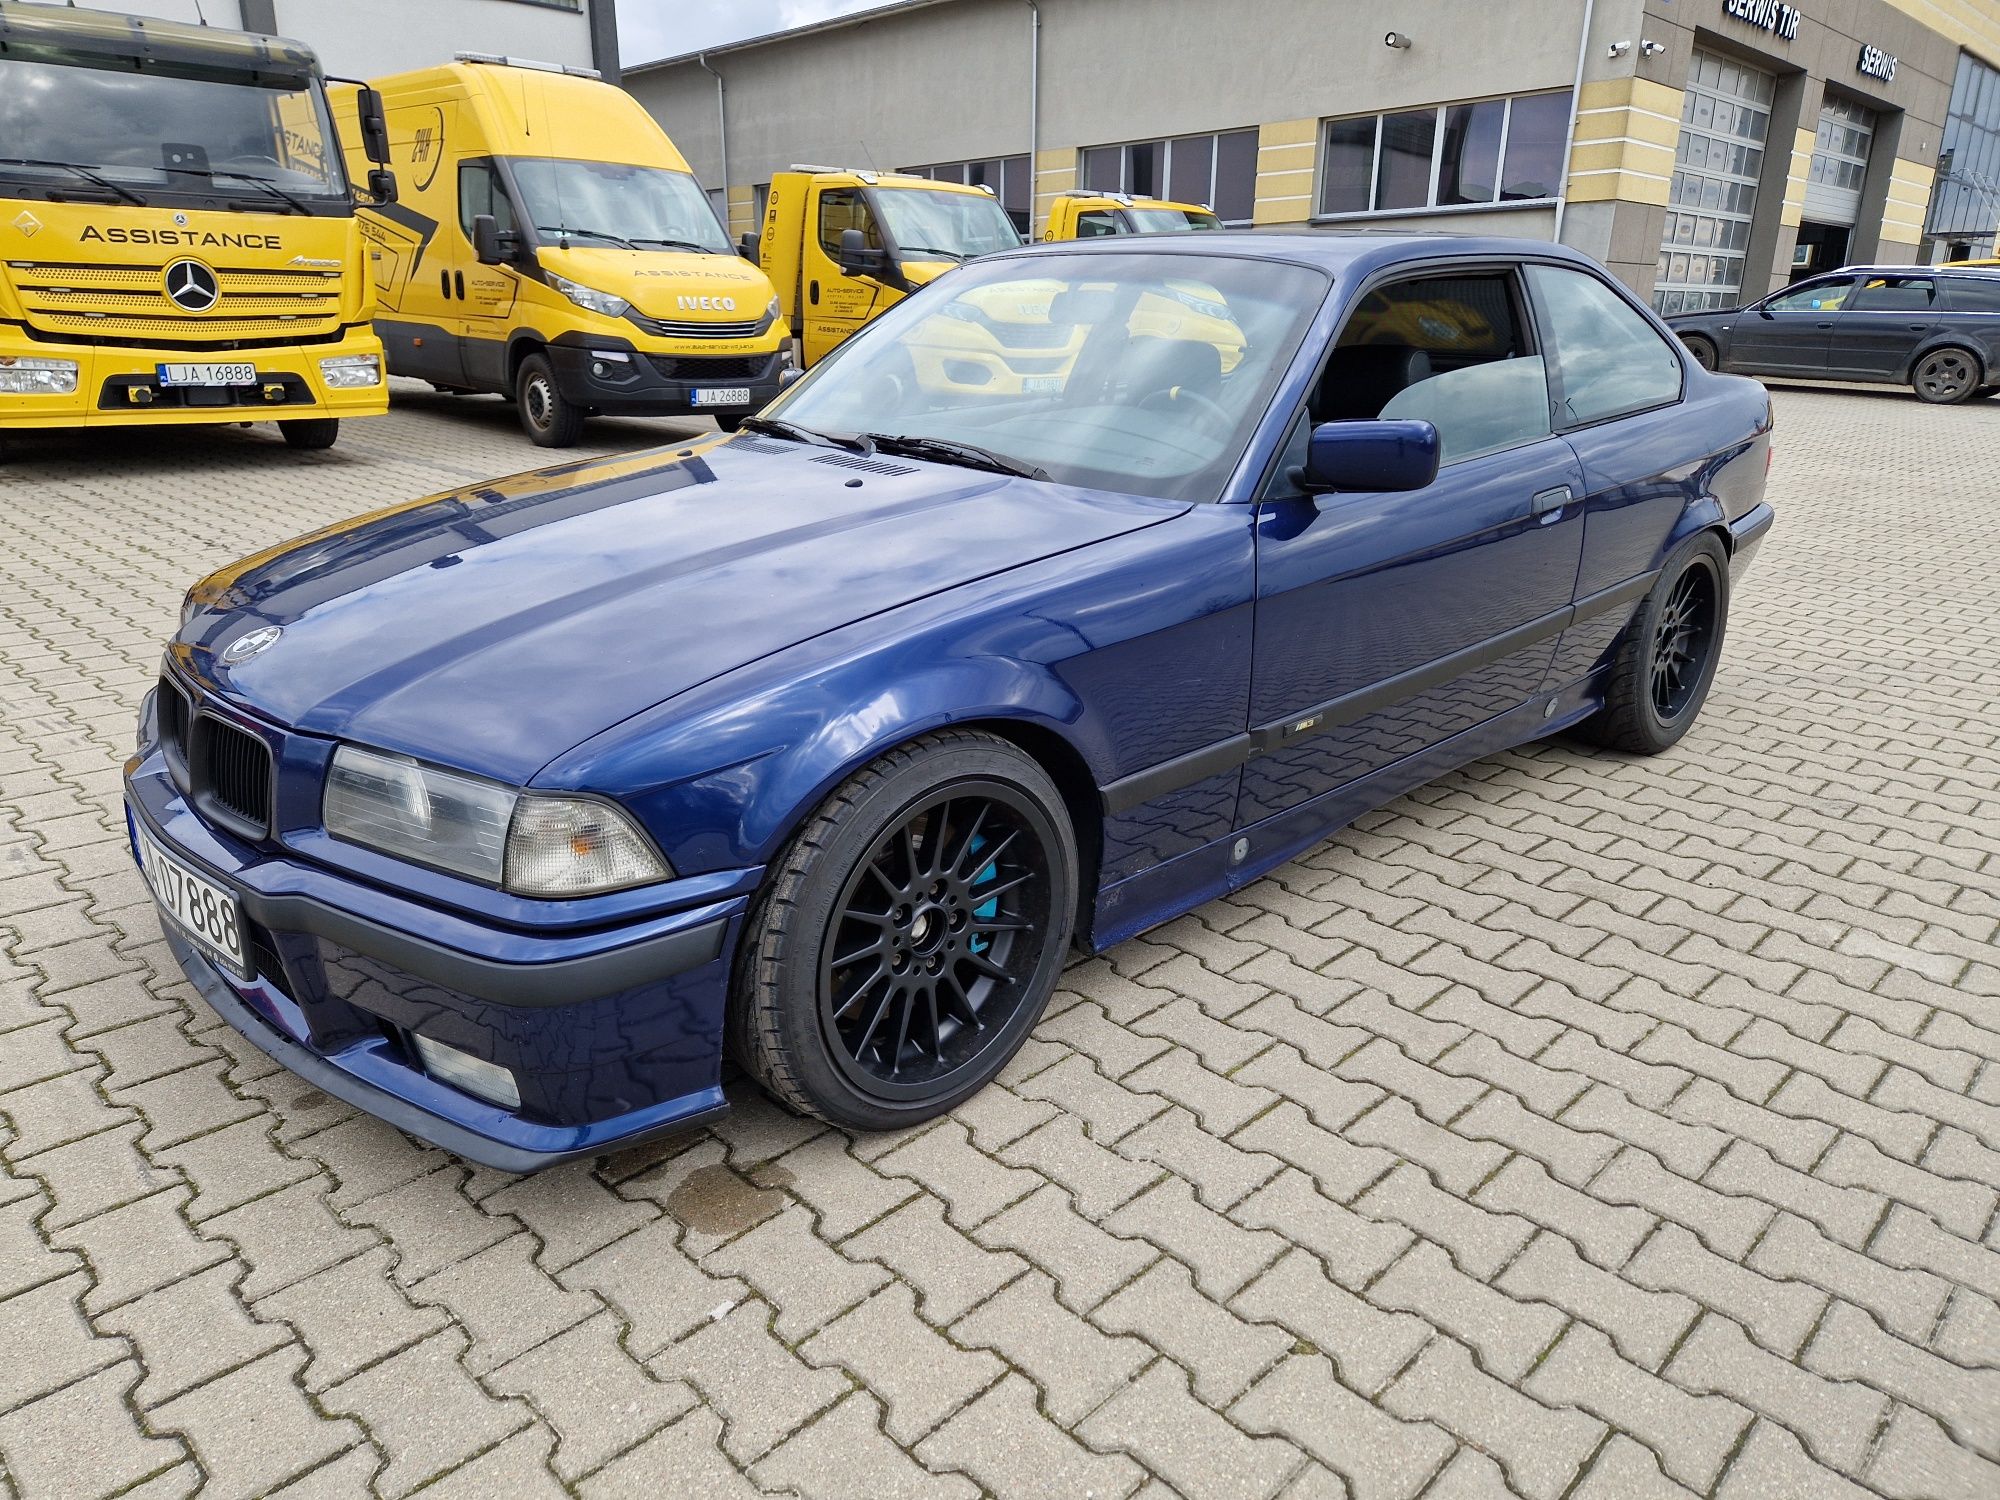 BMW E36 2.5T +500HP